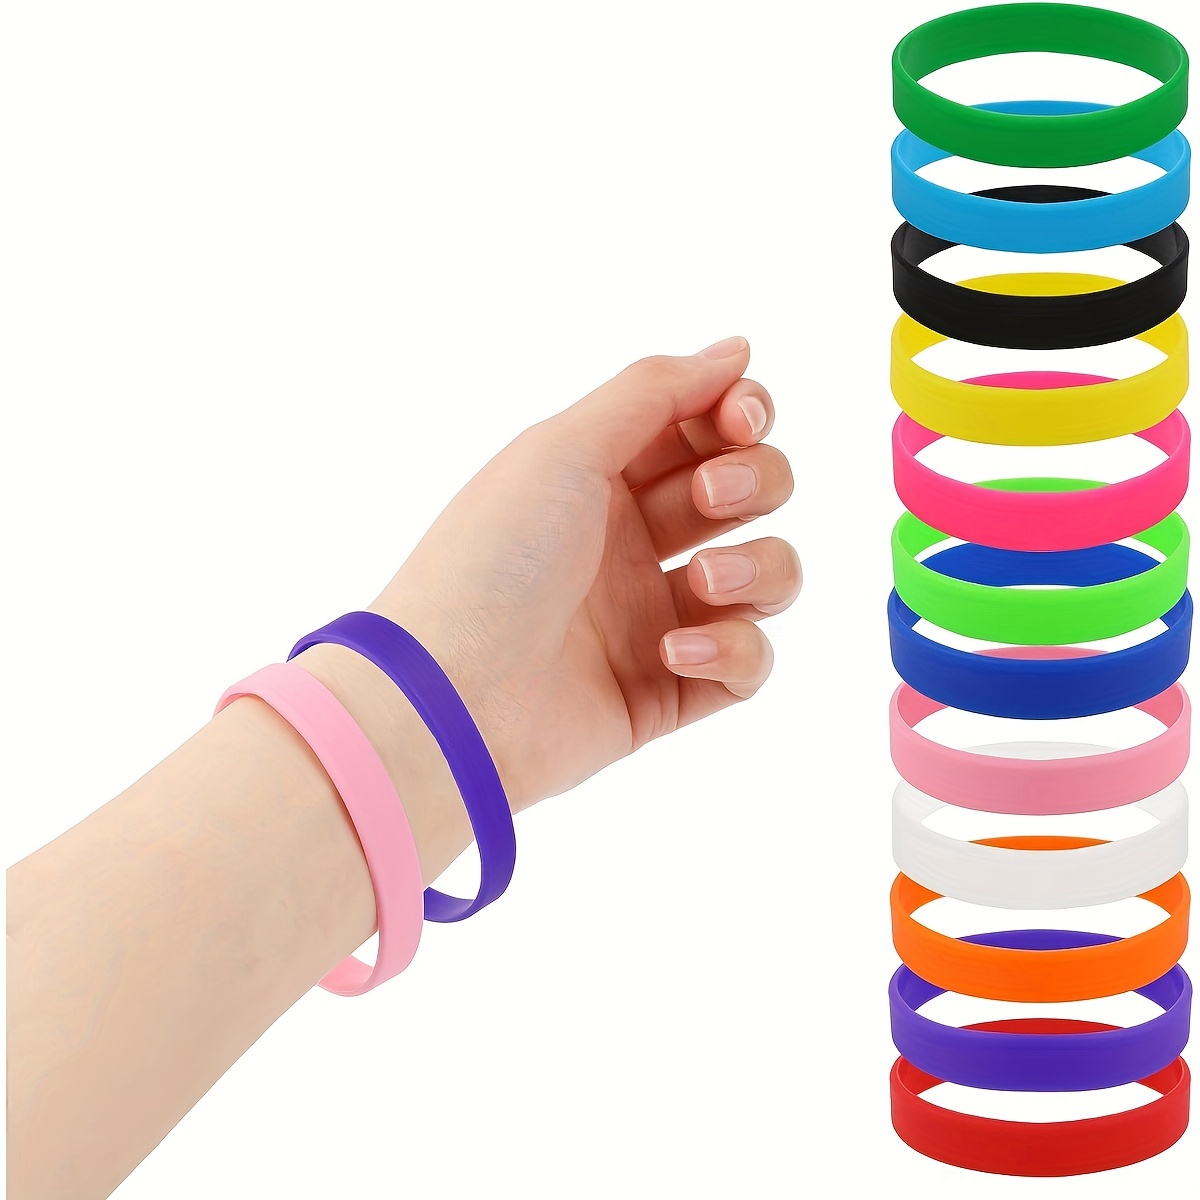 20 Silicone Rubber Elastic 5mm Wristband Bracelet Cuff Bangle Sports Wrist  Bands